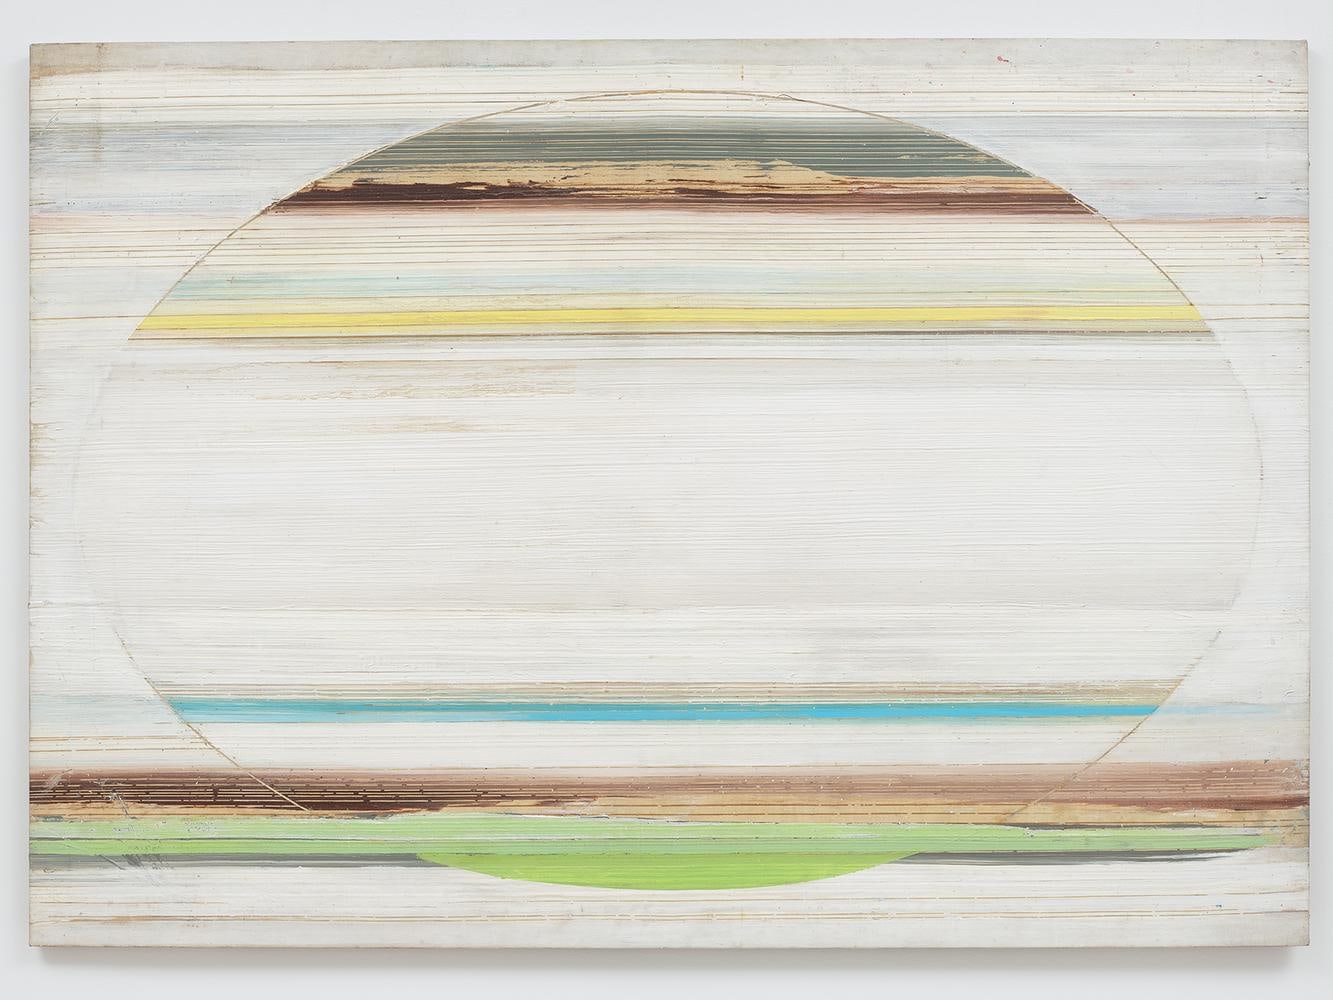 Ed Clark Untitled 1974-75 acrylic on canvas 57 1/4 x 80 1/4 inches (144.8 x 203.2 cm)